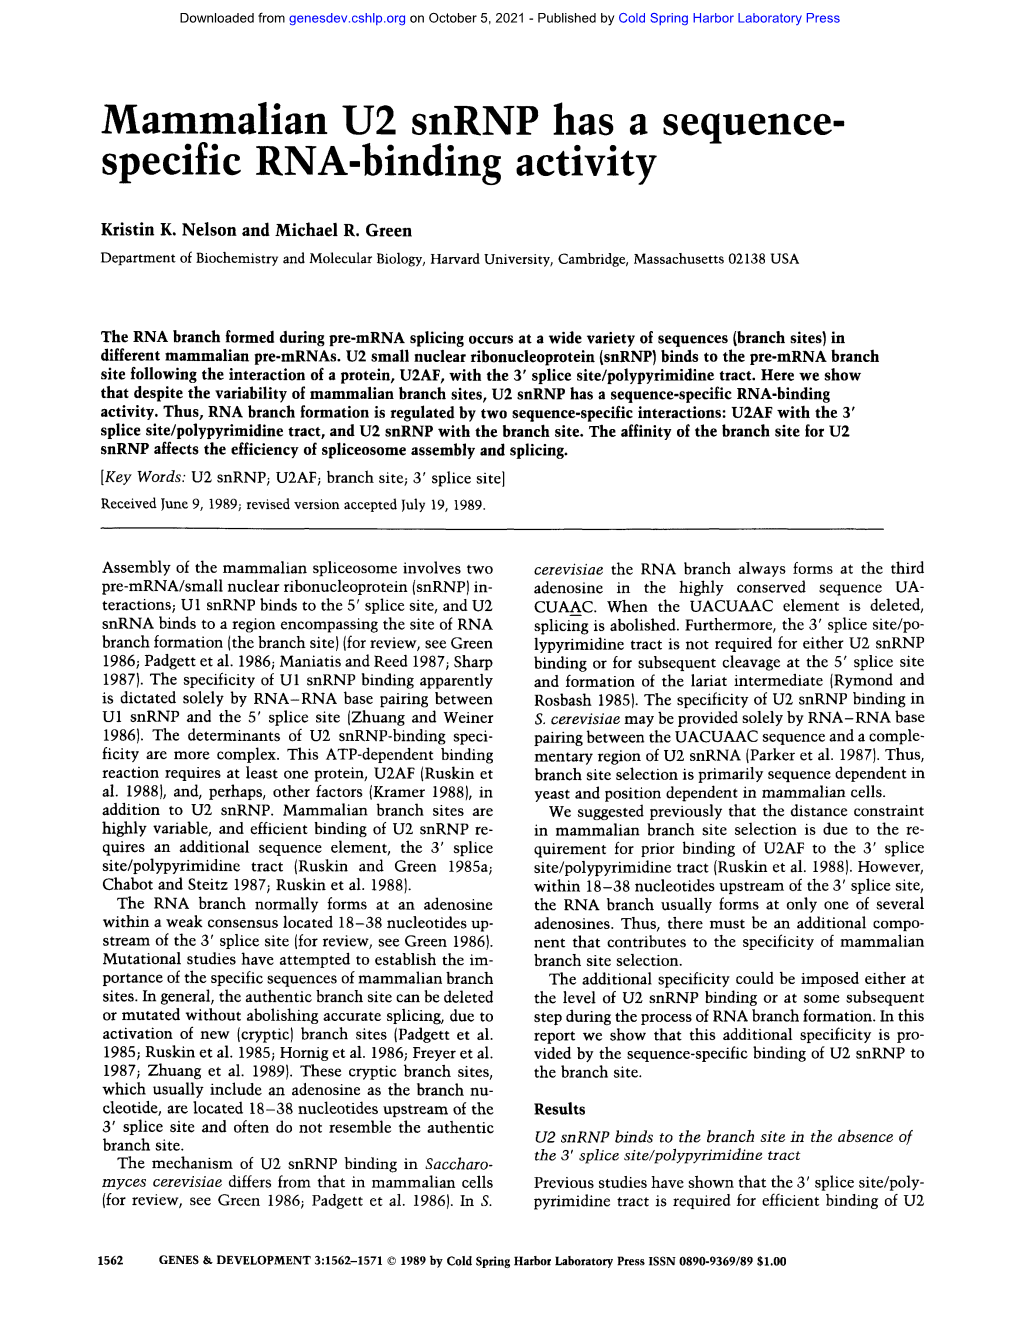 Mammalian U2 Snrnp Has a Sequence- Specific RNA-Binding Activity